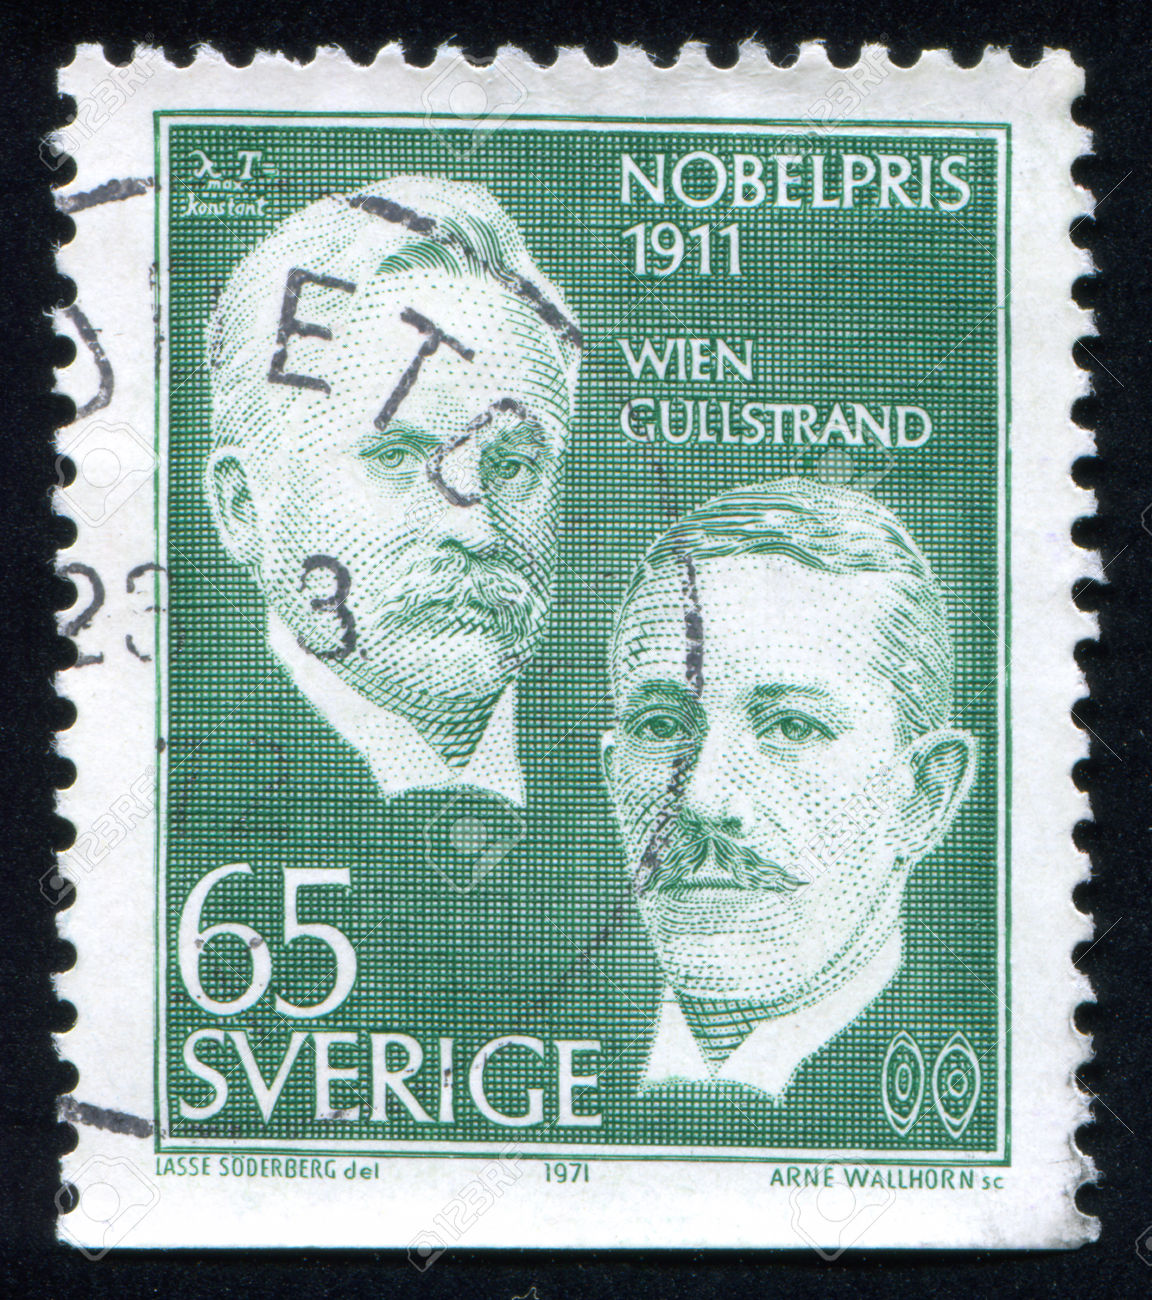 25219215-SWEDEN-CIRCA-1971-stamp-printed-by-Sweden-shows-Wilhelm-Wien-and-Alvar-Gullstrand-circa-1971-Stock-Photo.jpg